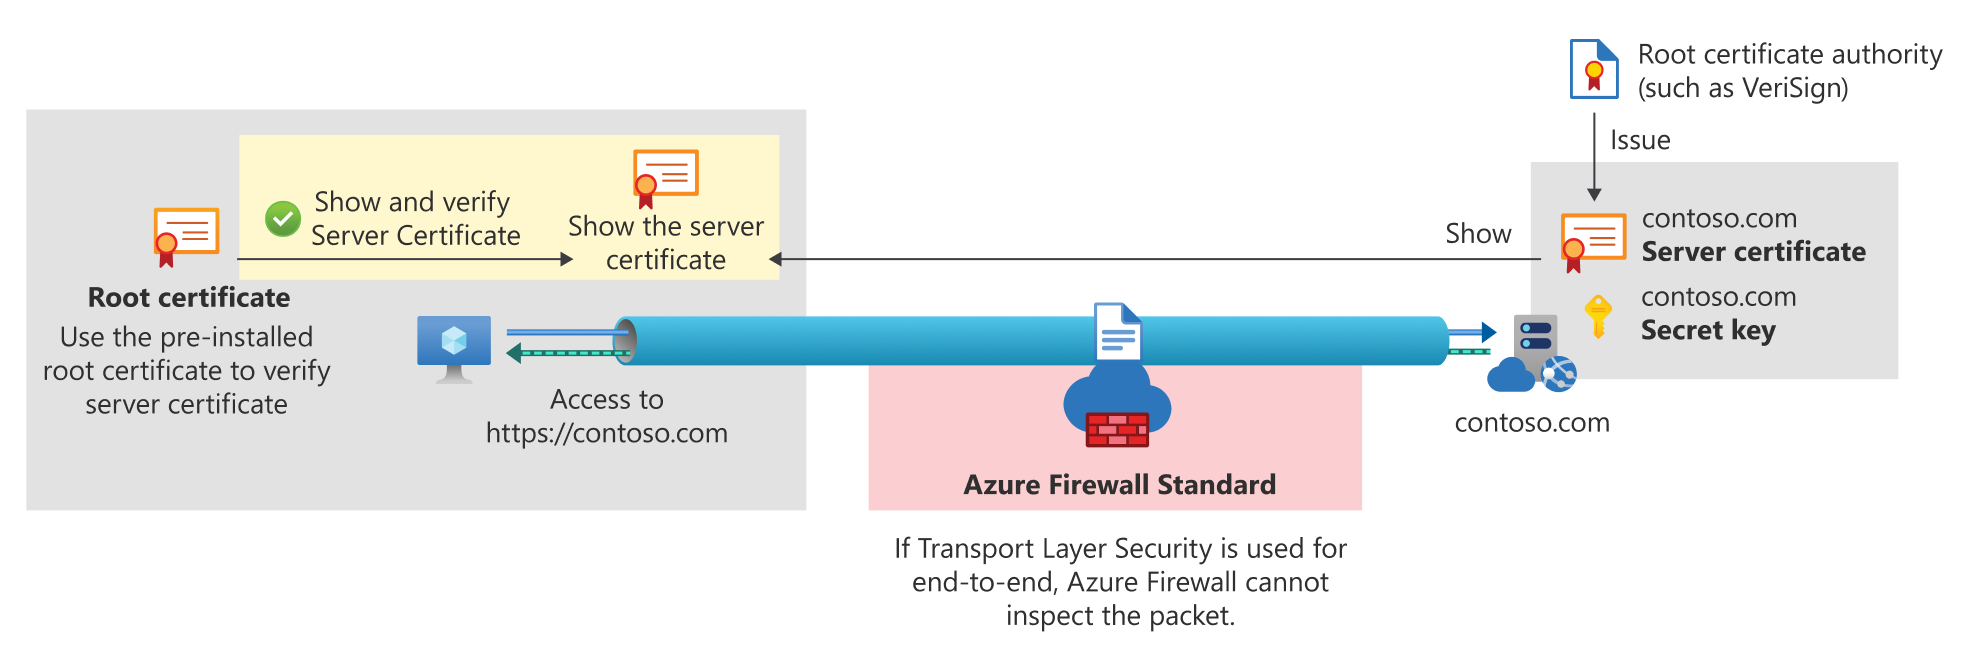 End-to-end TLS for Azure Firewall Standard